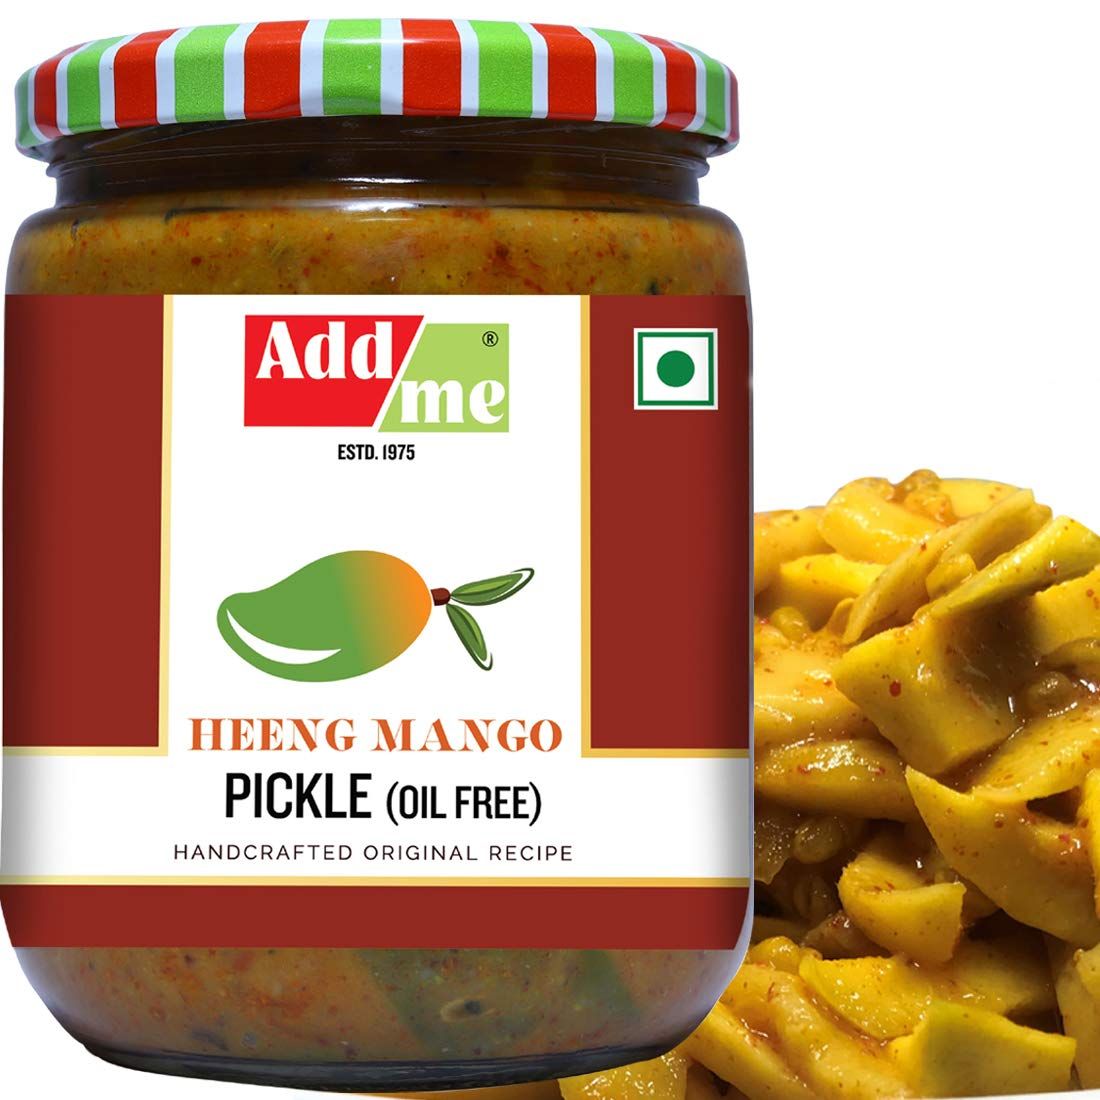 Add me Hing Achar Mango Pickle Image